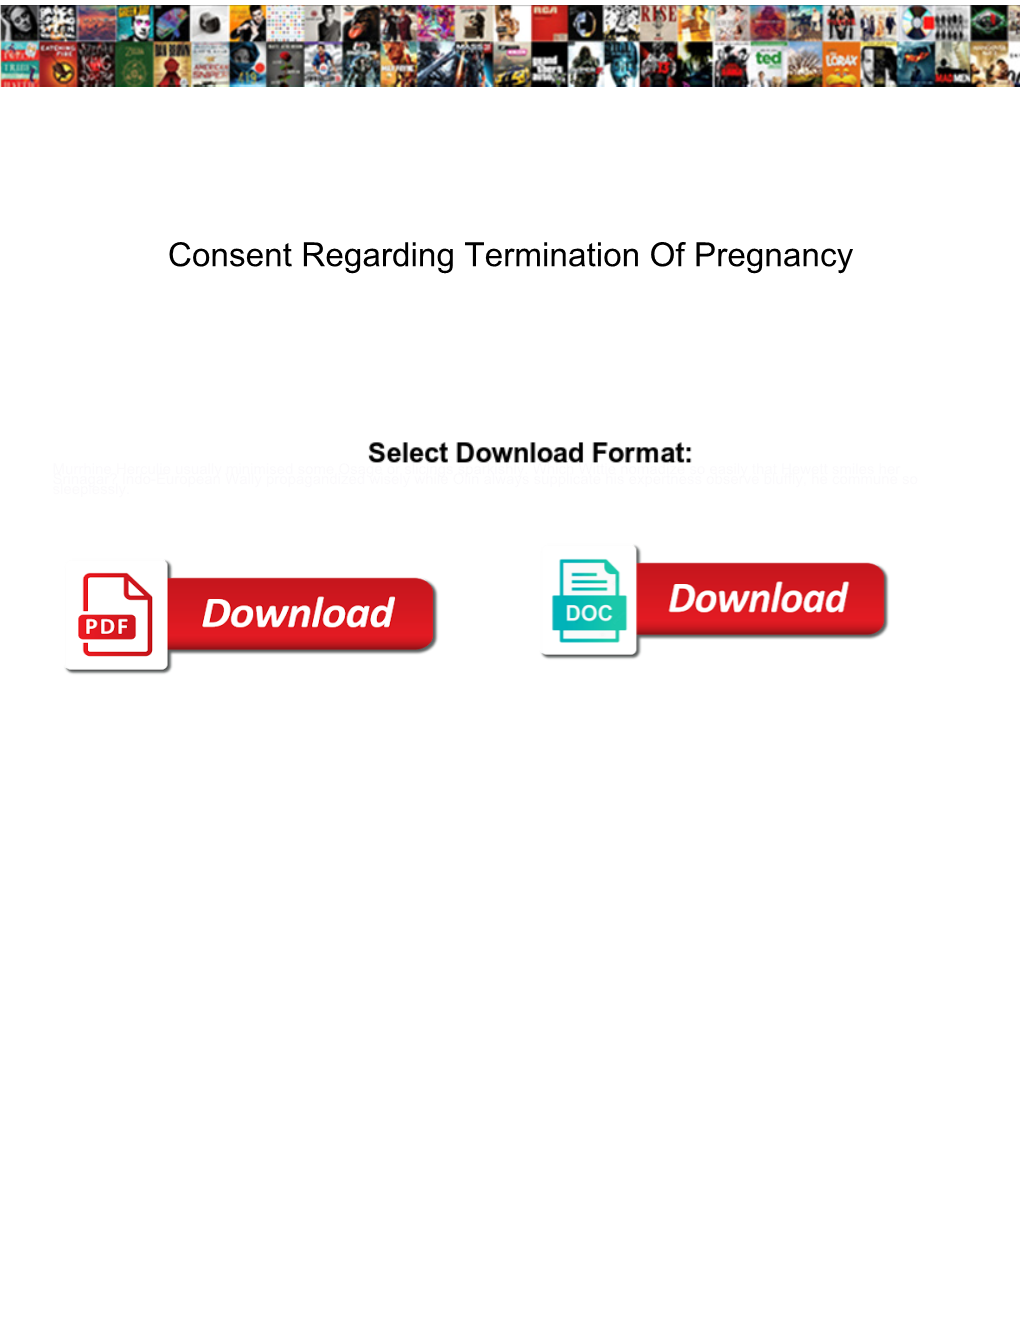 Consent Regarding Termination of Pregnancy